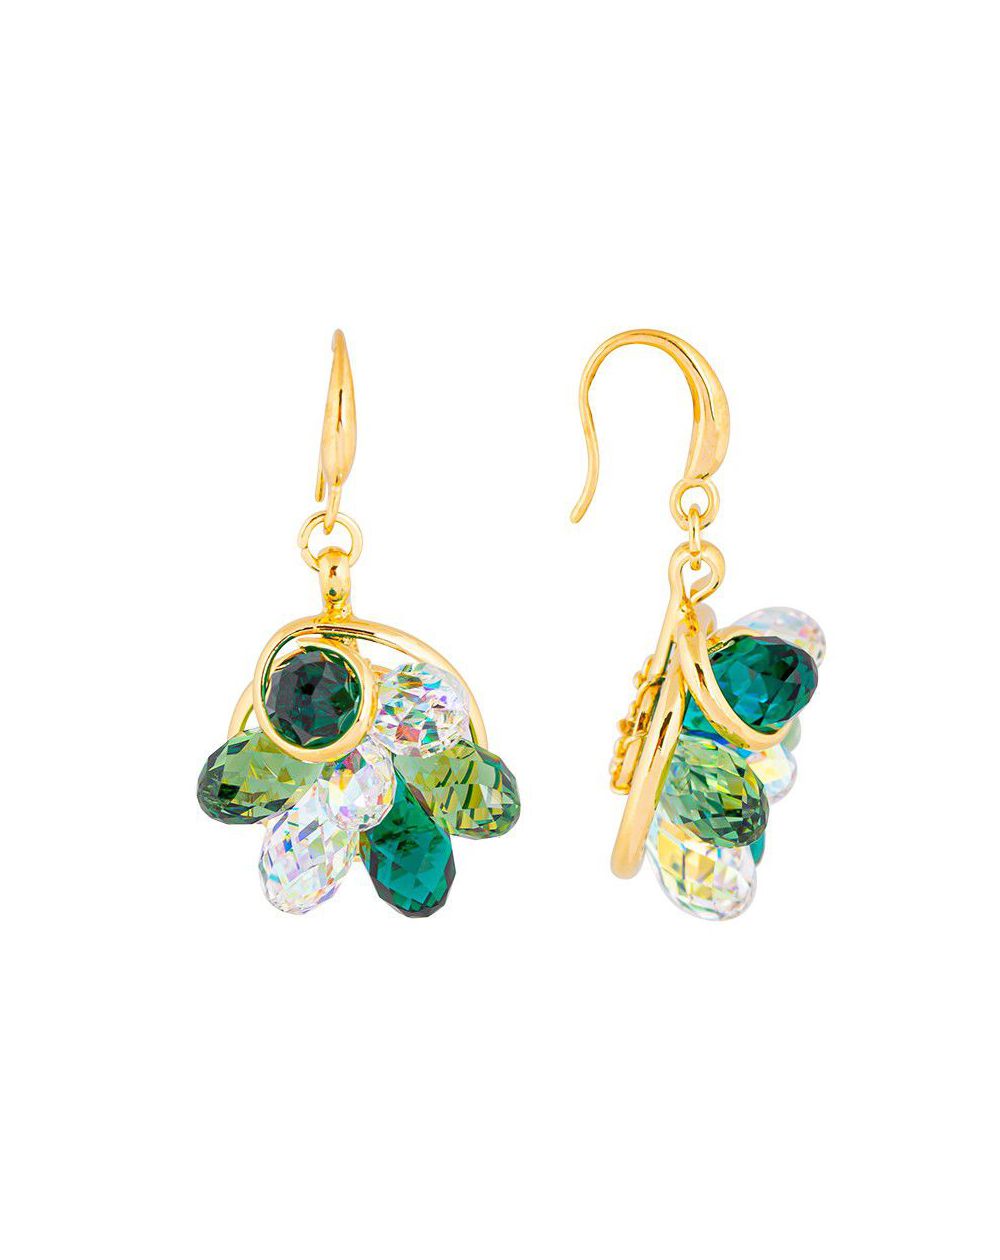 Boucles d'oreilles Andrea Marazzini - Cristal Swarovski Extra Small Bouquet Emerald